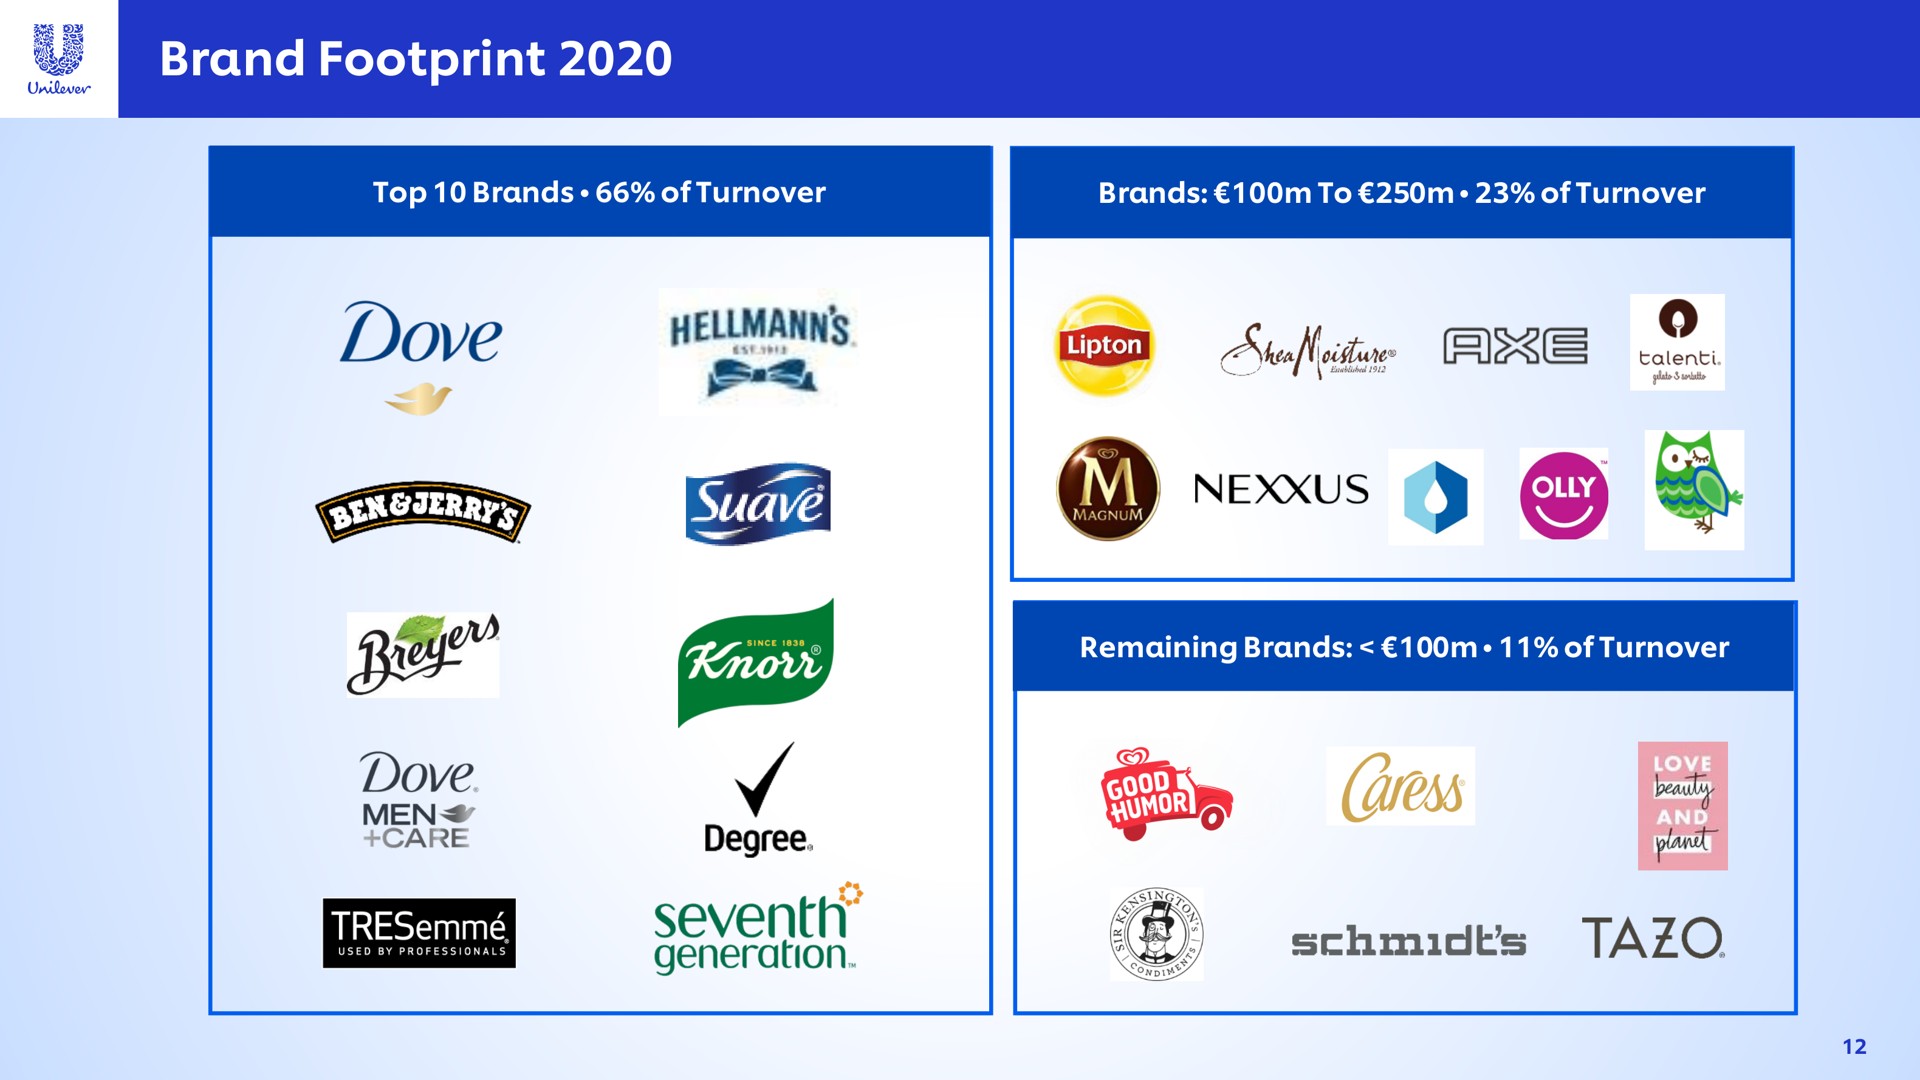 brand footprint seventy beau degree | Unilever